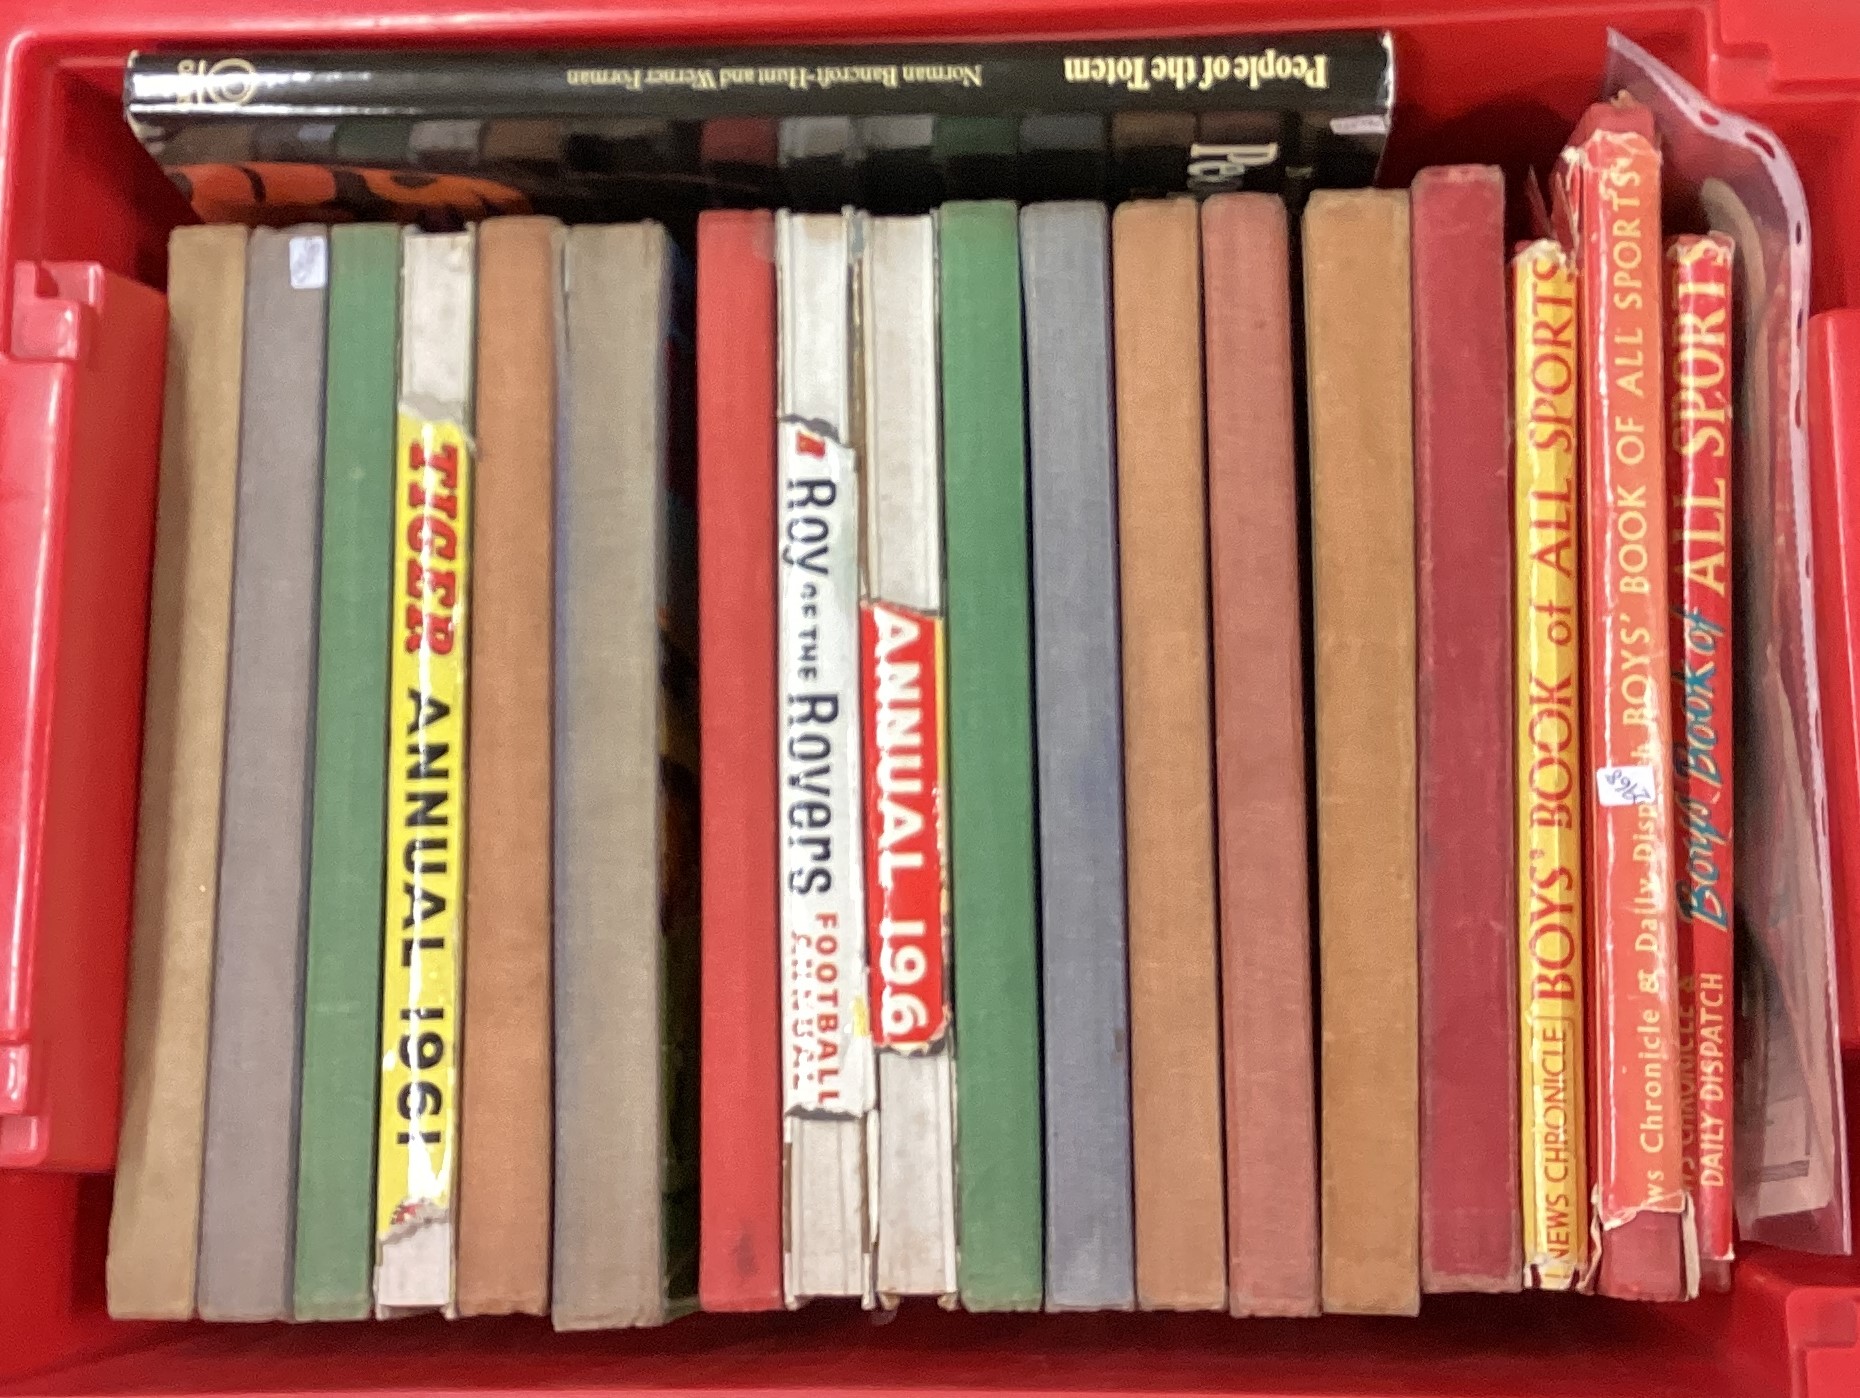 A box containing children's books.